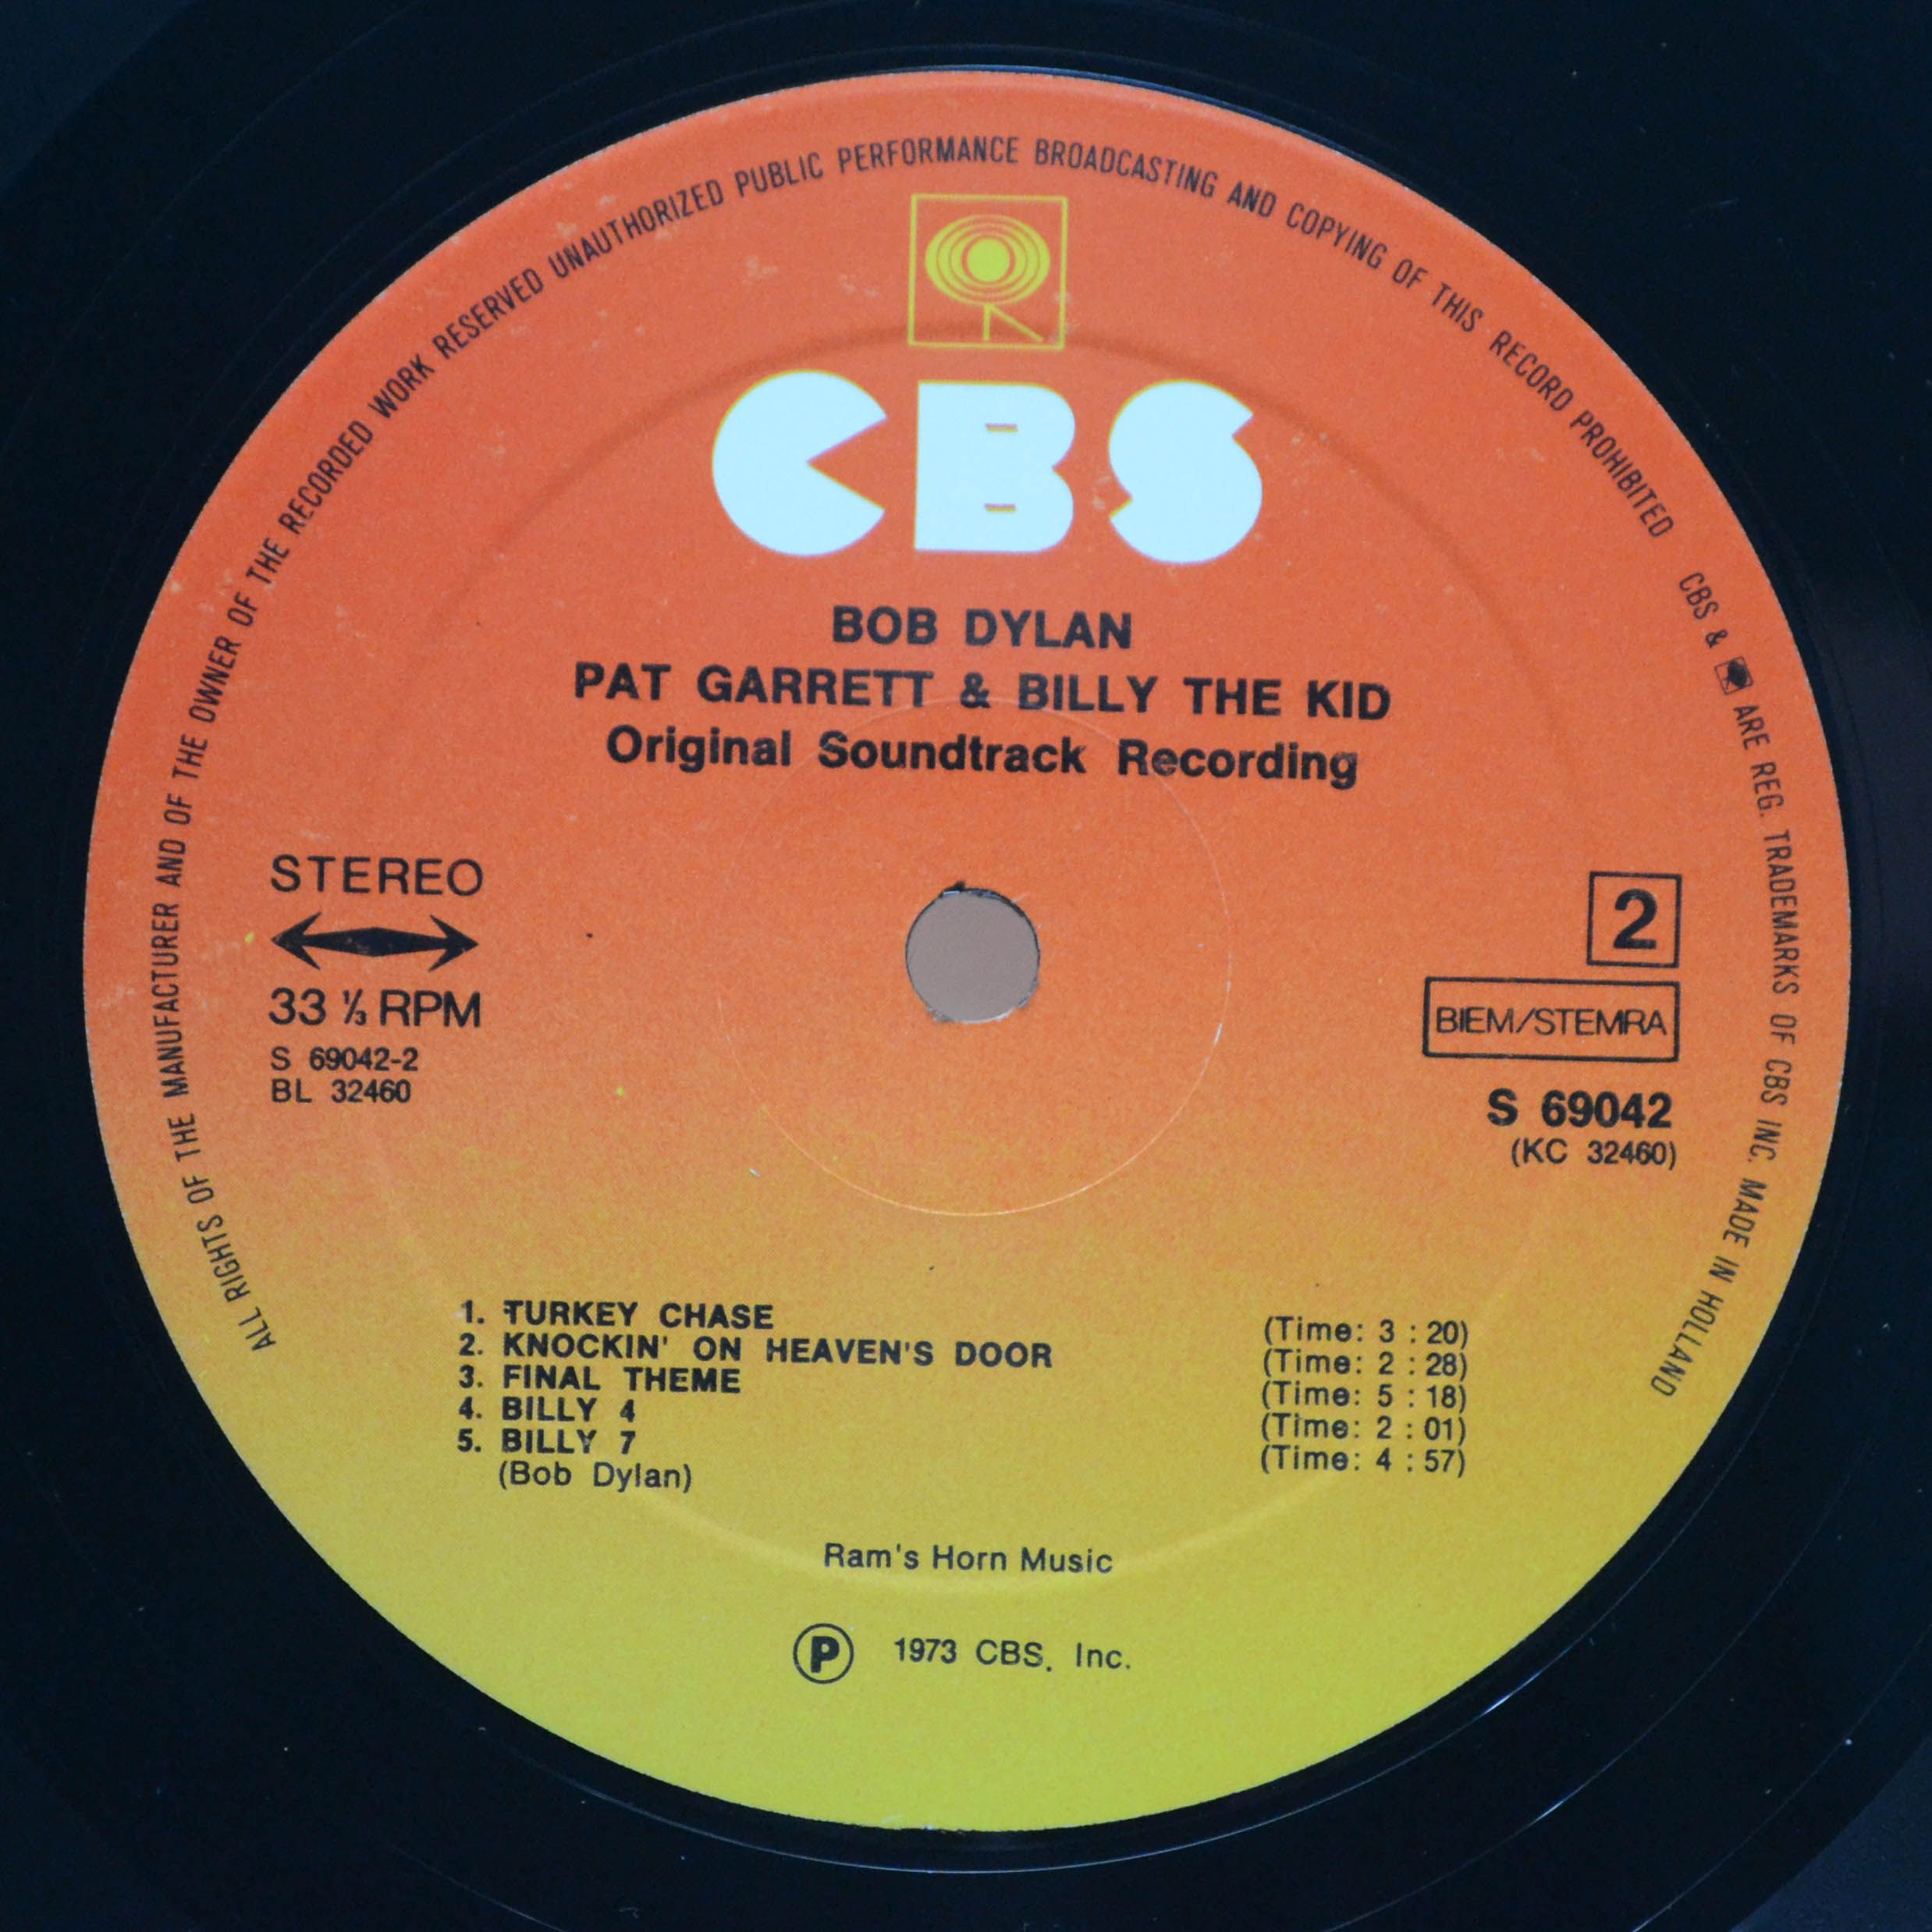 Bob Dylan — Pat Garrett & Billy The Kid - Original Soundtrack Recording, 1973